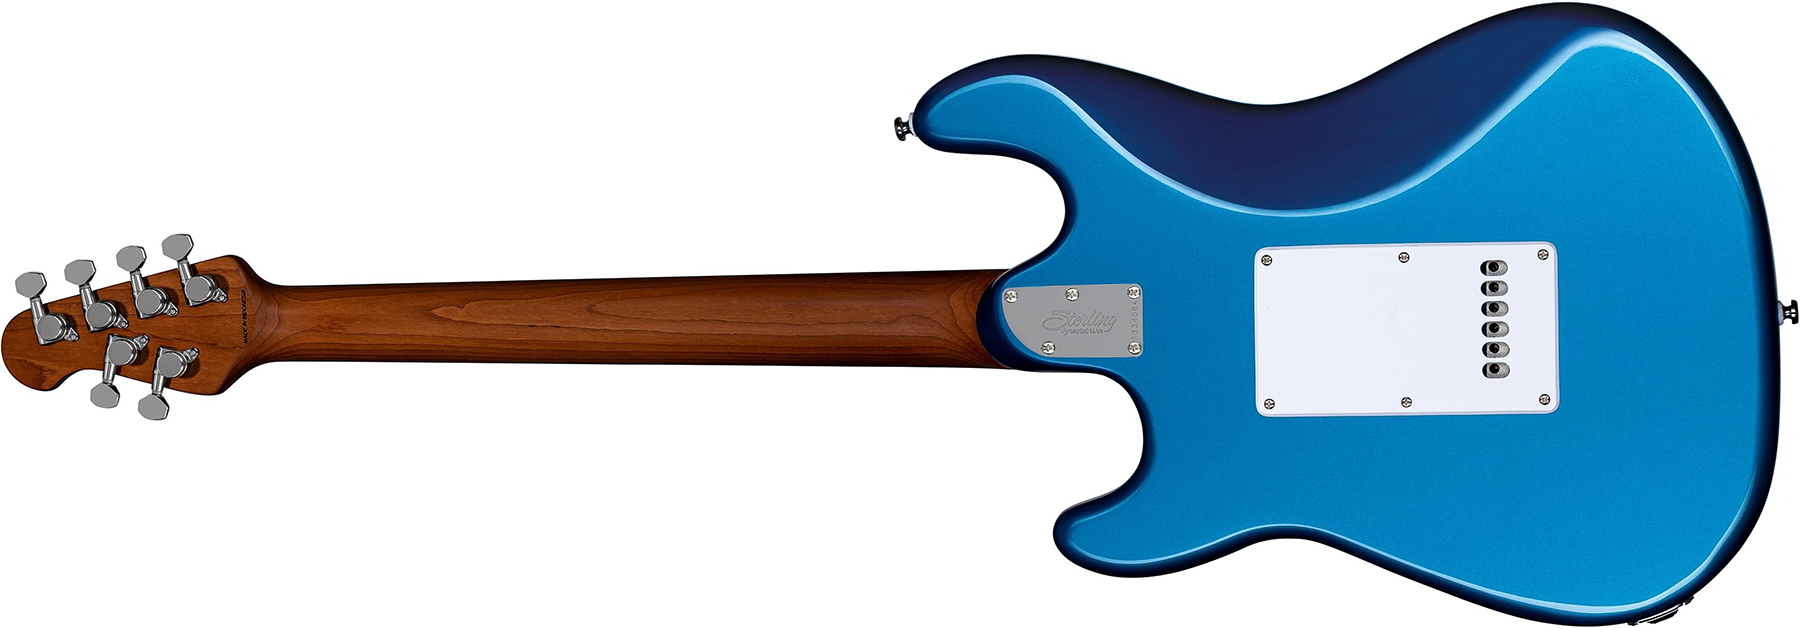 Sterling By Musicman Cutlass Ct50sss 3s Trem Rw - Toluca Lake Blue - E-Gitarre in Str-Form - Variation 1